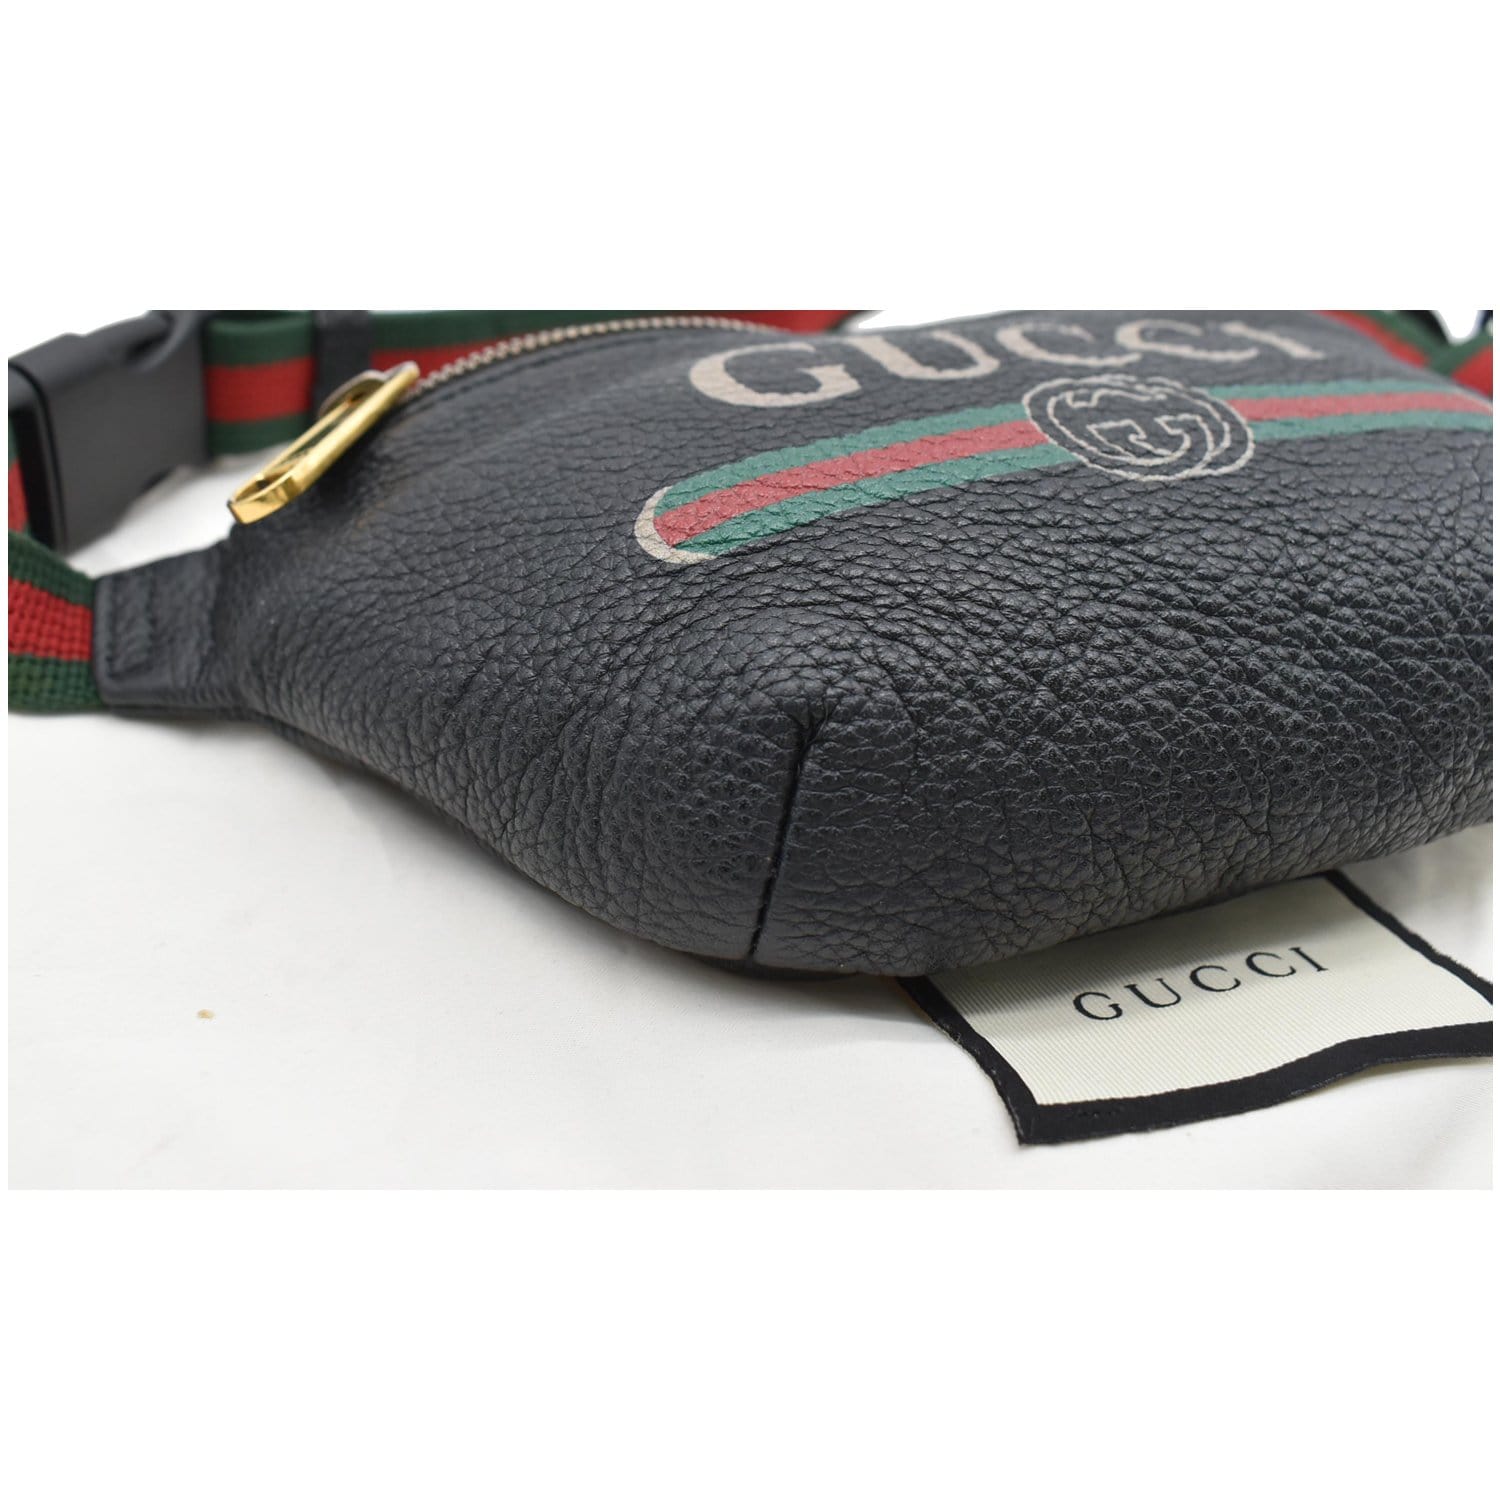 Gucci, Bags, Gucci Authentic Black Belt Bag